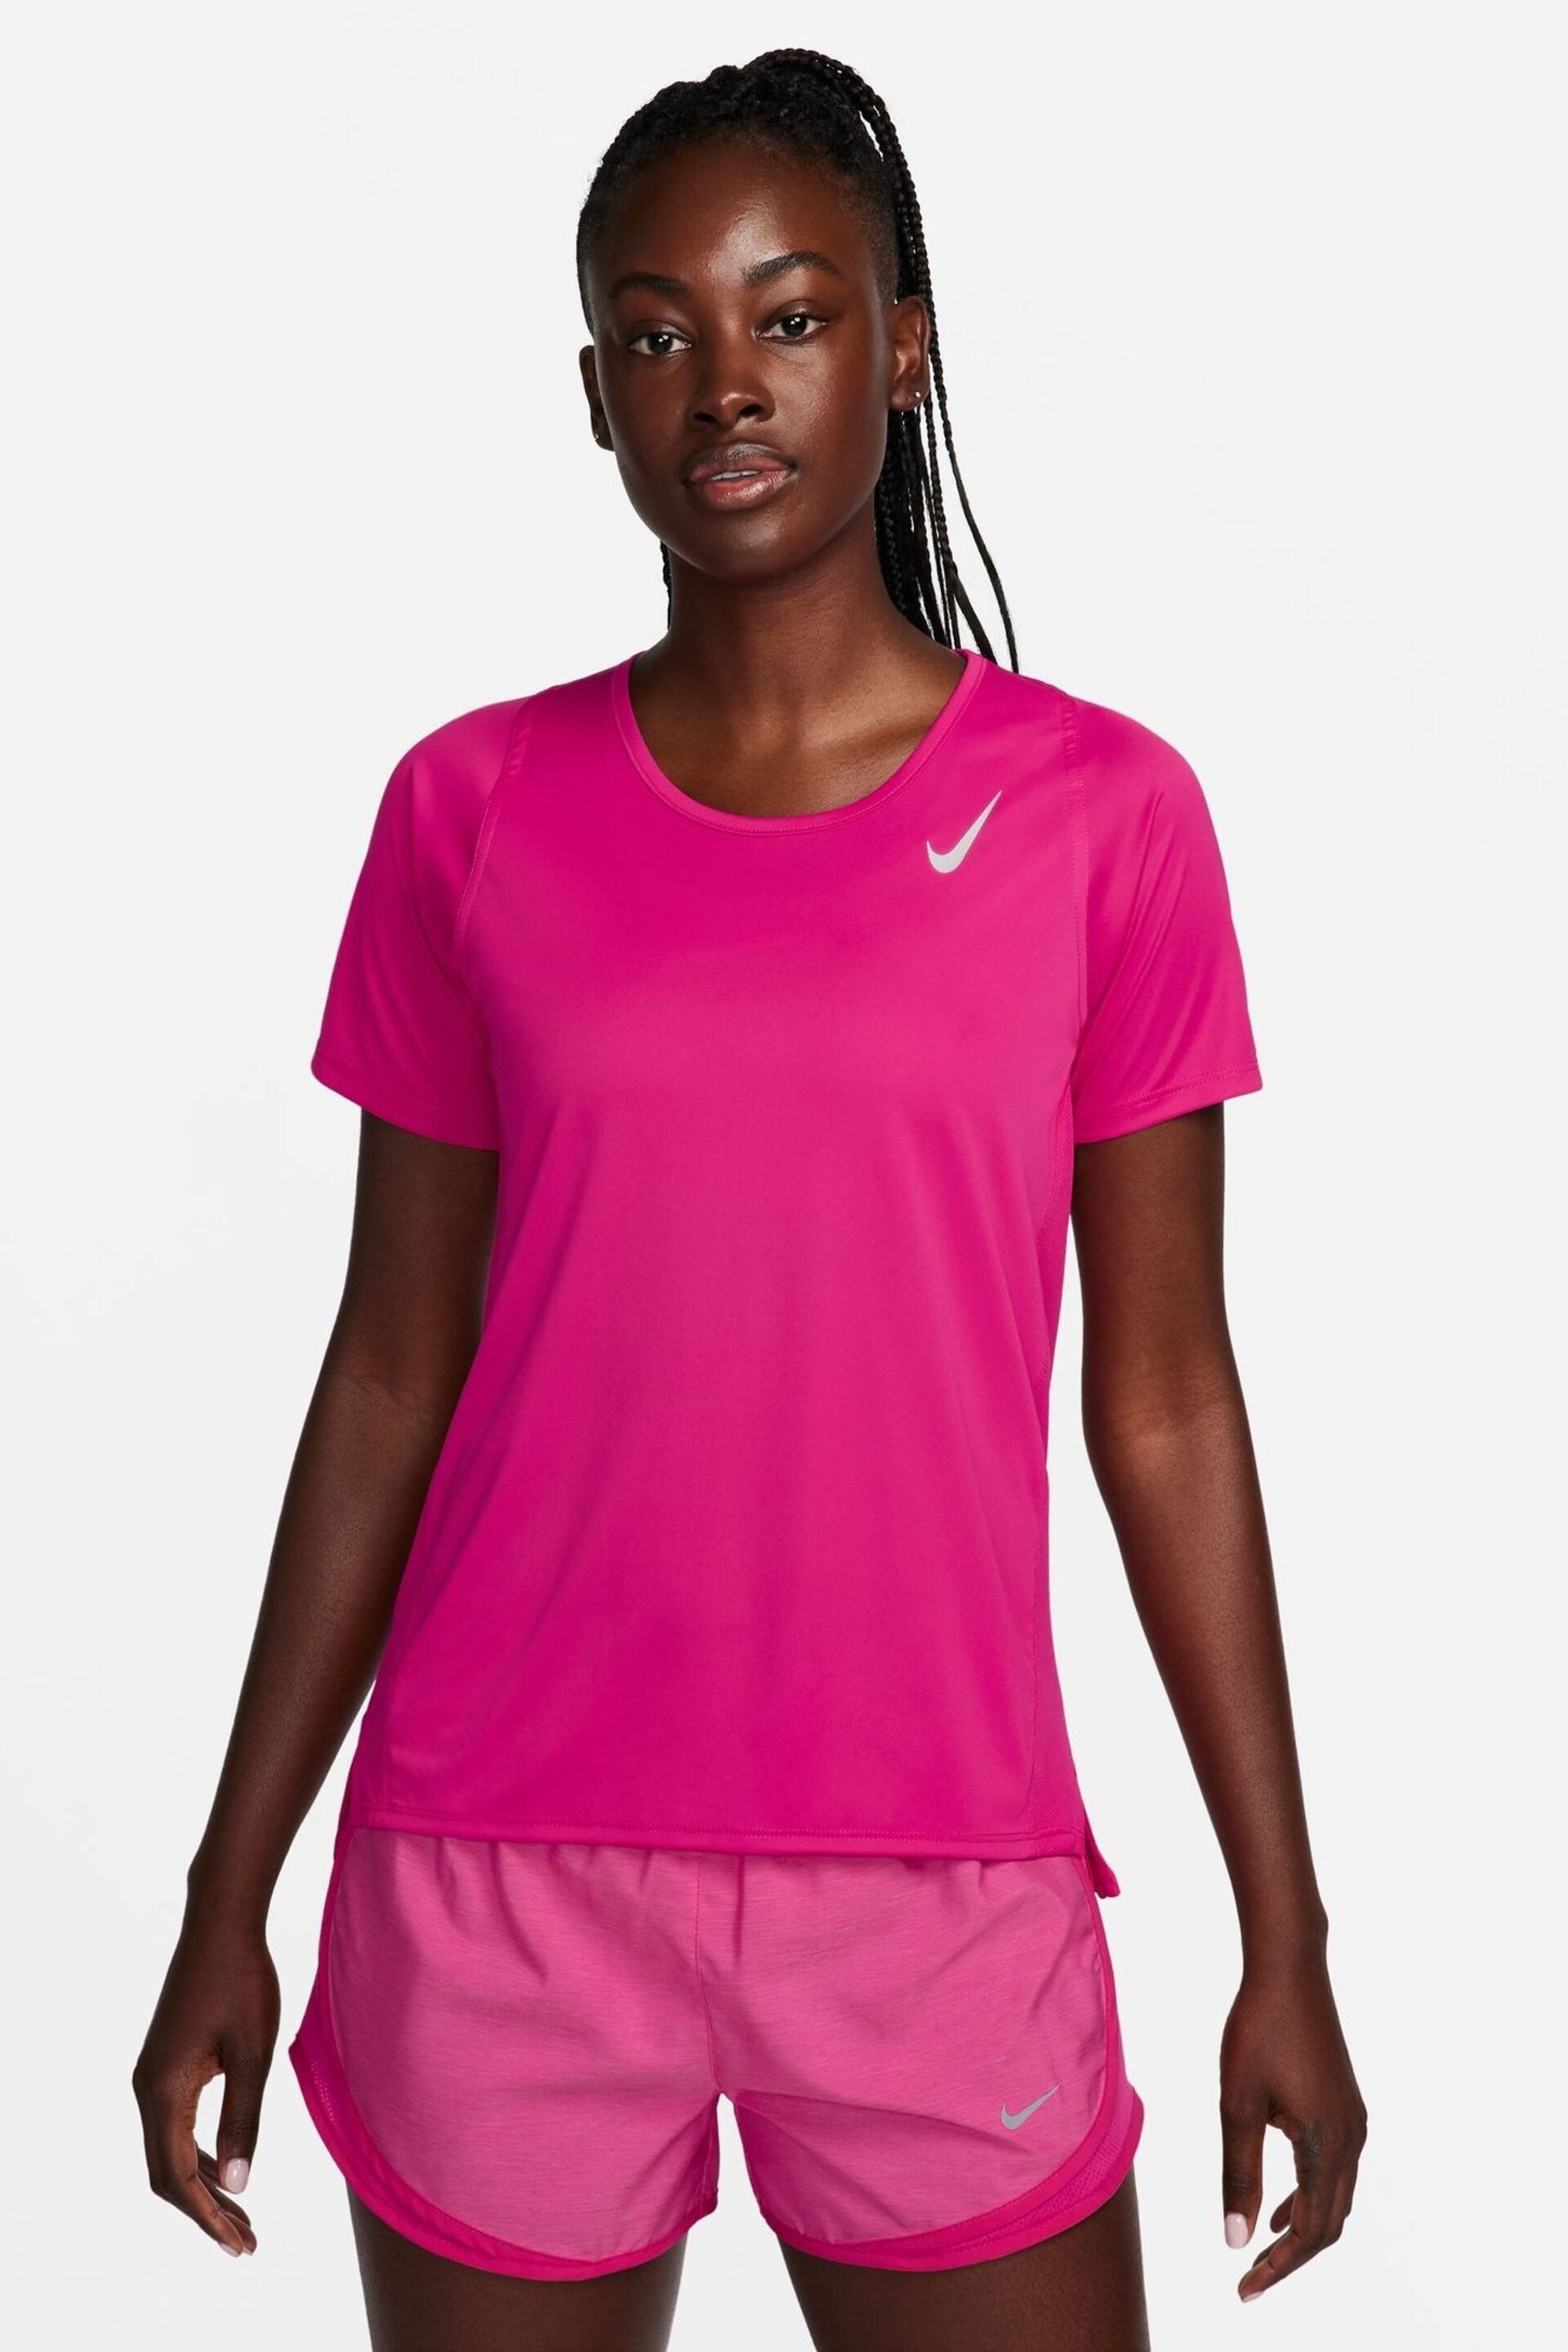 Nike Fushsia Pink Dri-FIT Race Short Sleeve Running Top - Image 1 of 5